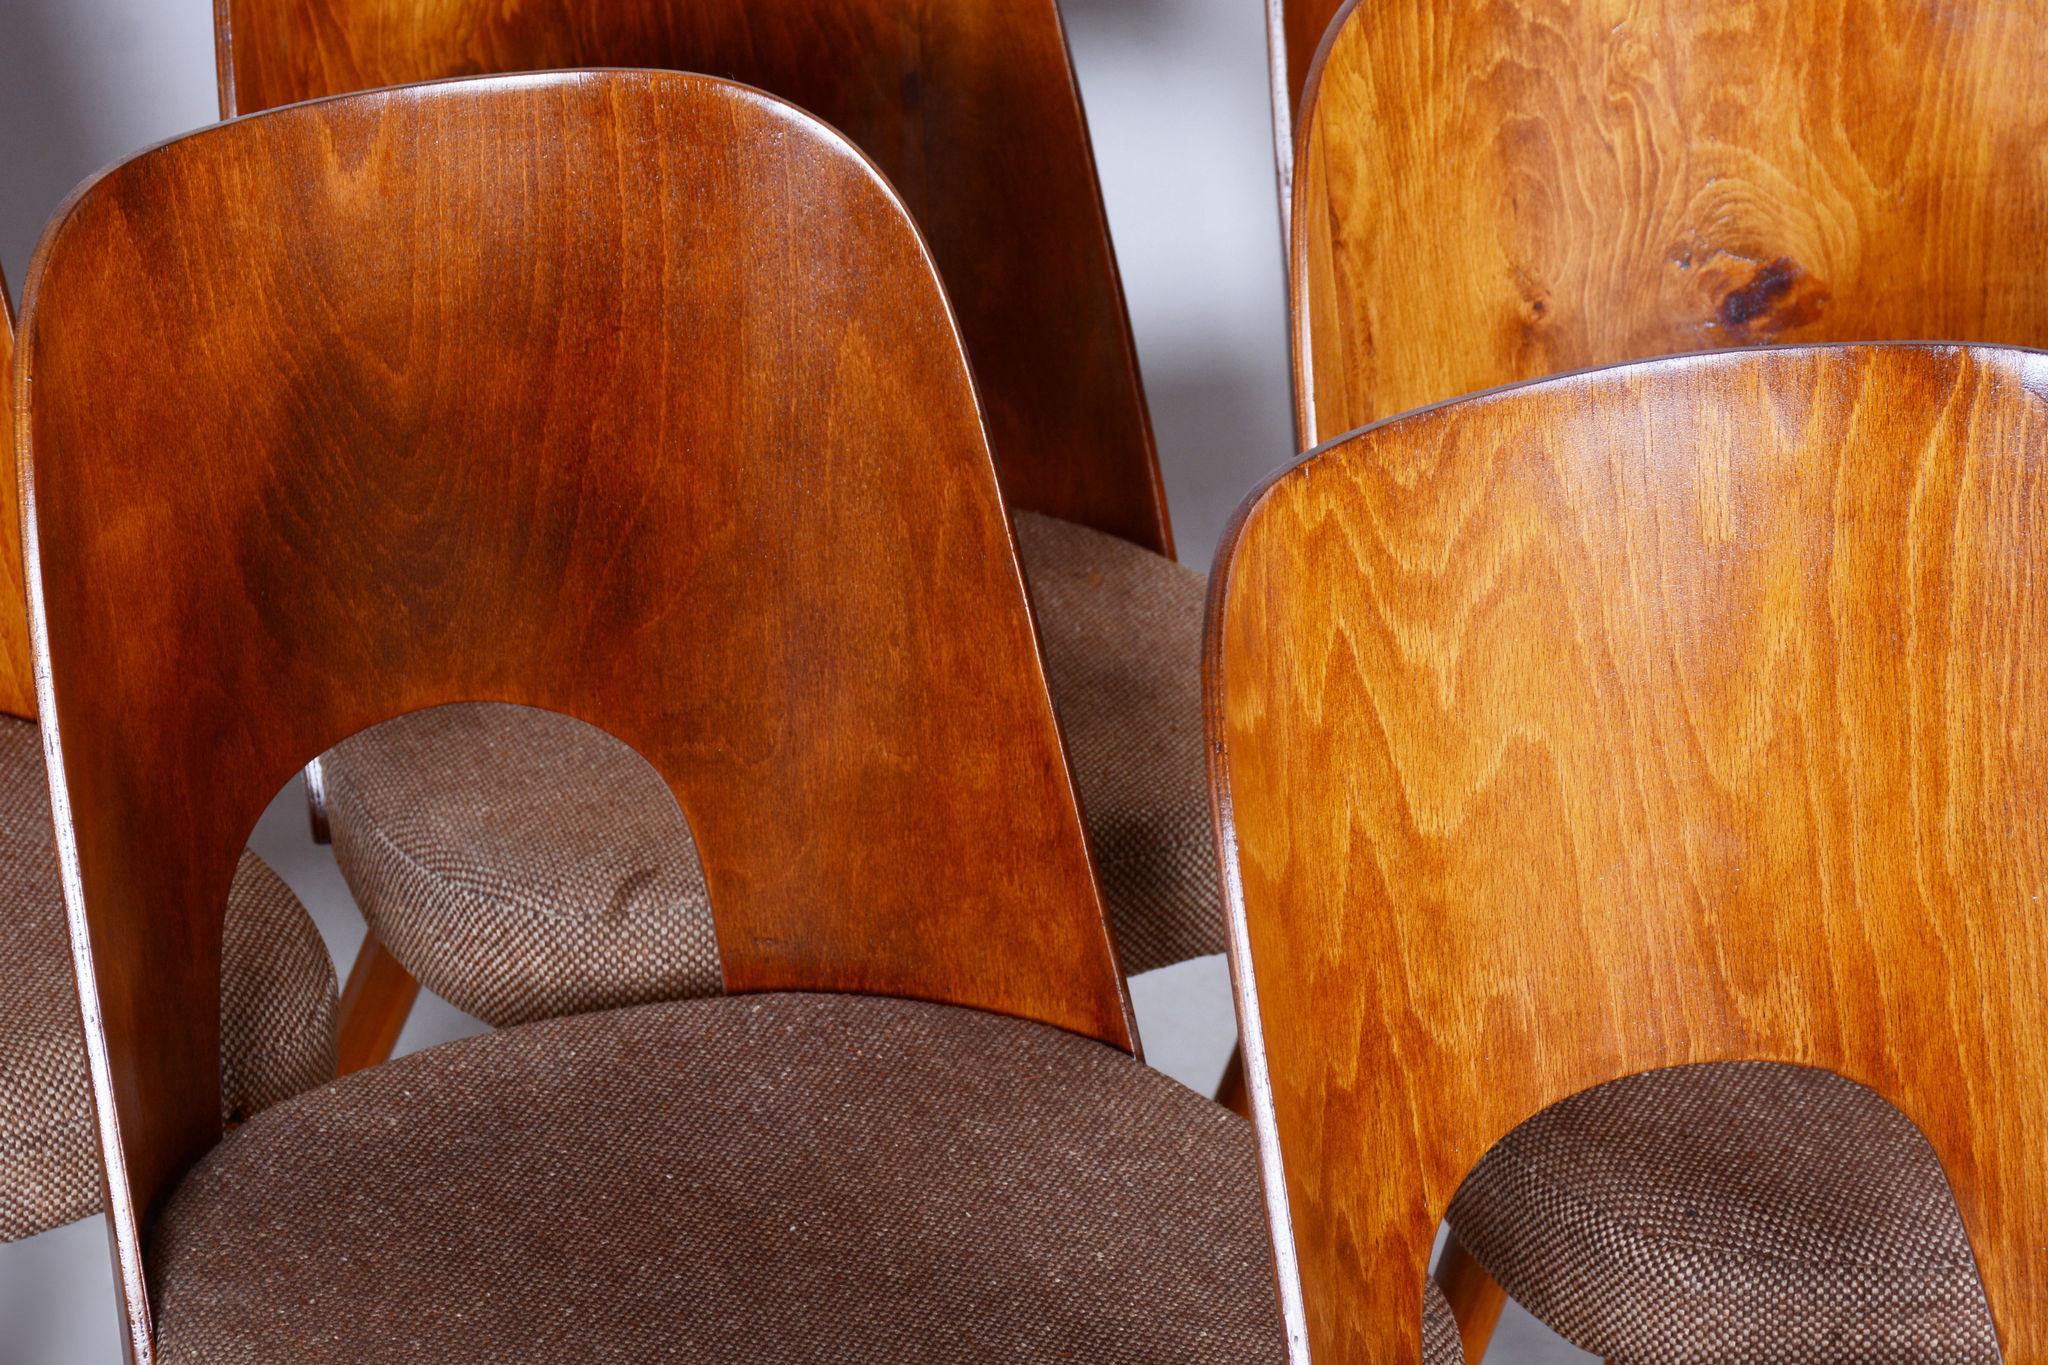 Upholstery Set of Six Restored Mid-Century Modern Chairs, Beech, Czechia, 1950-1959